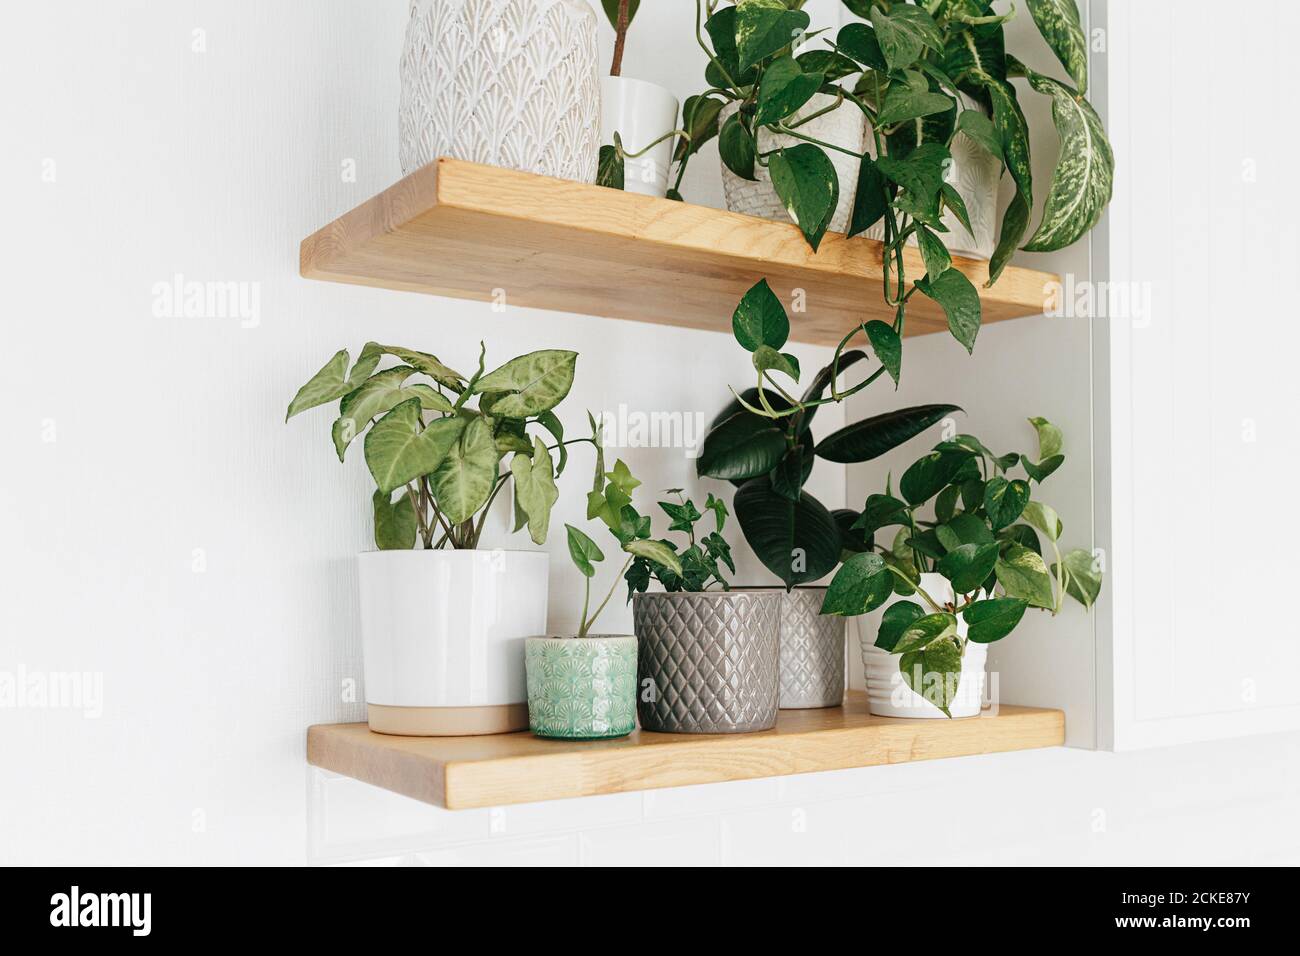 Stylish green houseplants on wooden shelves. Modern room decor urban jungle. Dieffenbachia, epipremnum, ficus, ivy, sansevieria in pots on shelf Stock Photo